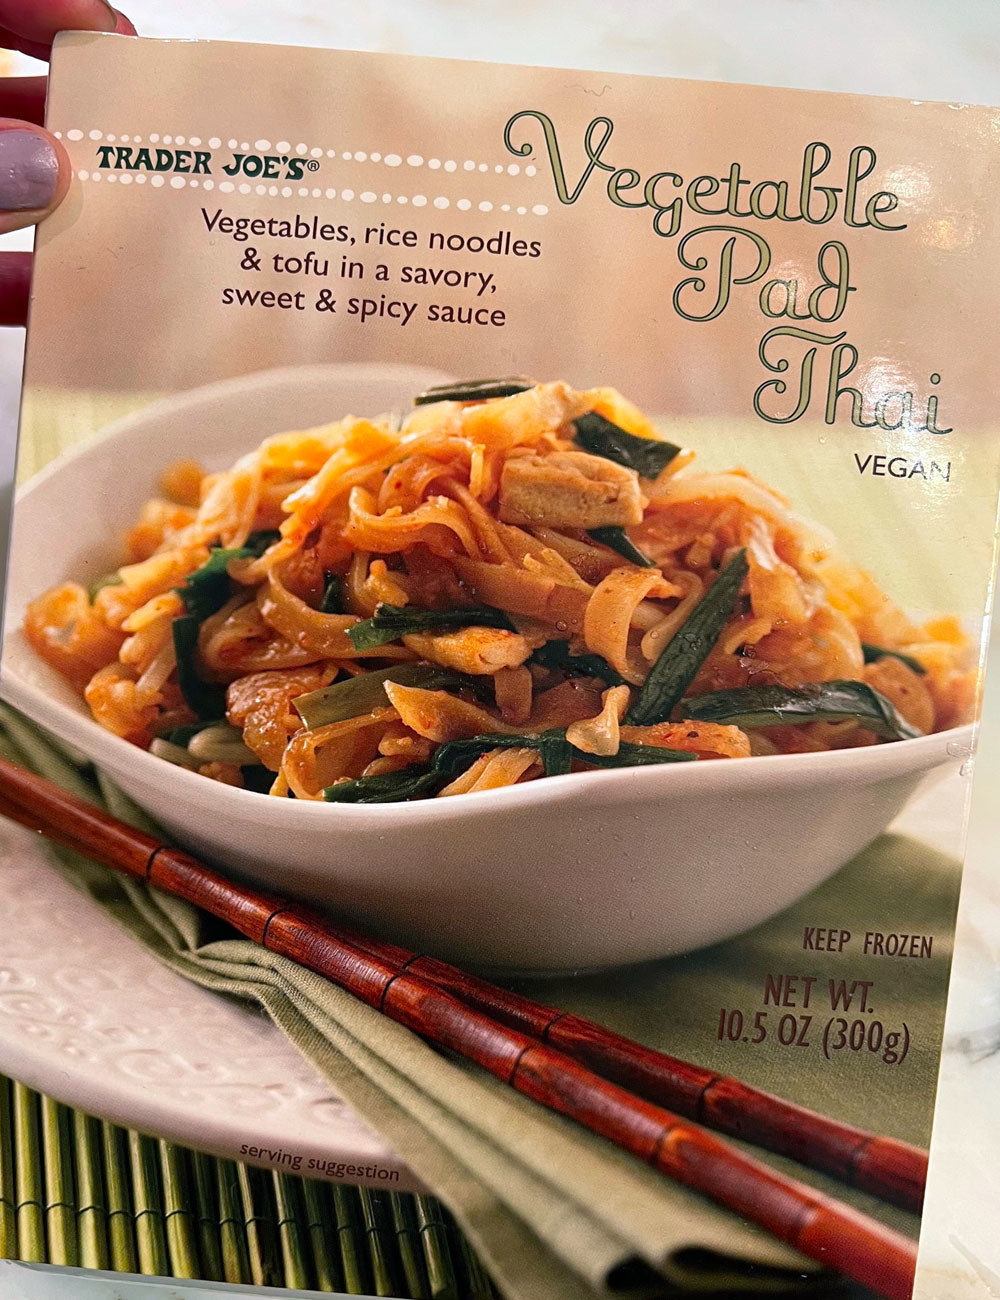 A package of Vegetable Pad Thai